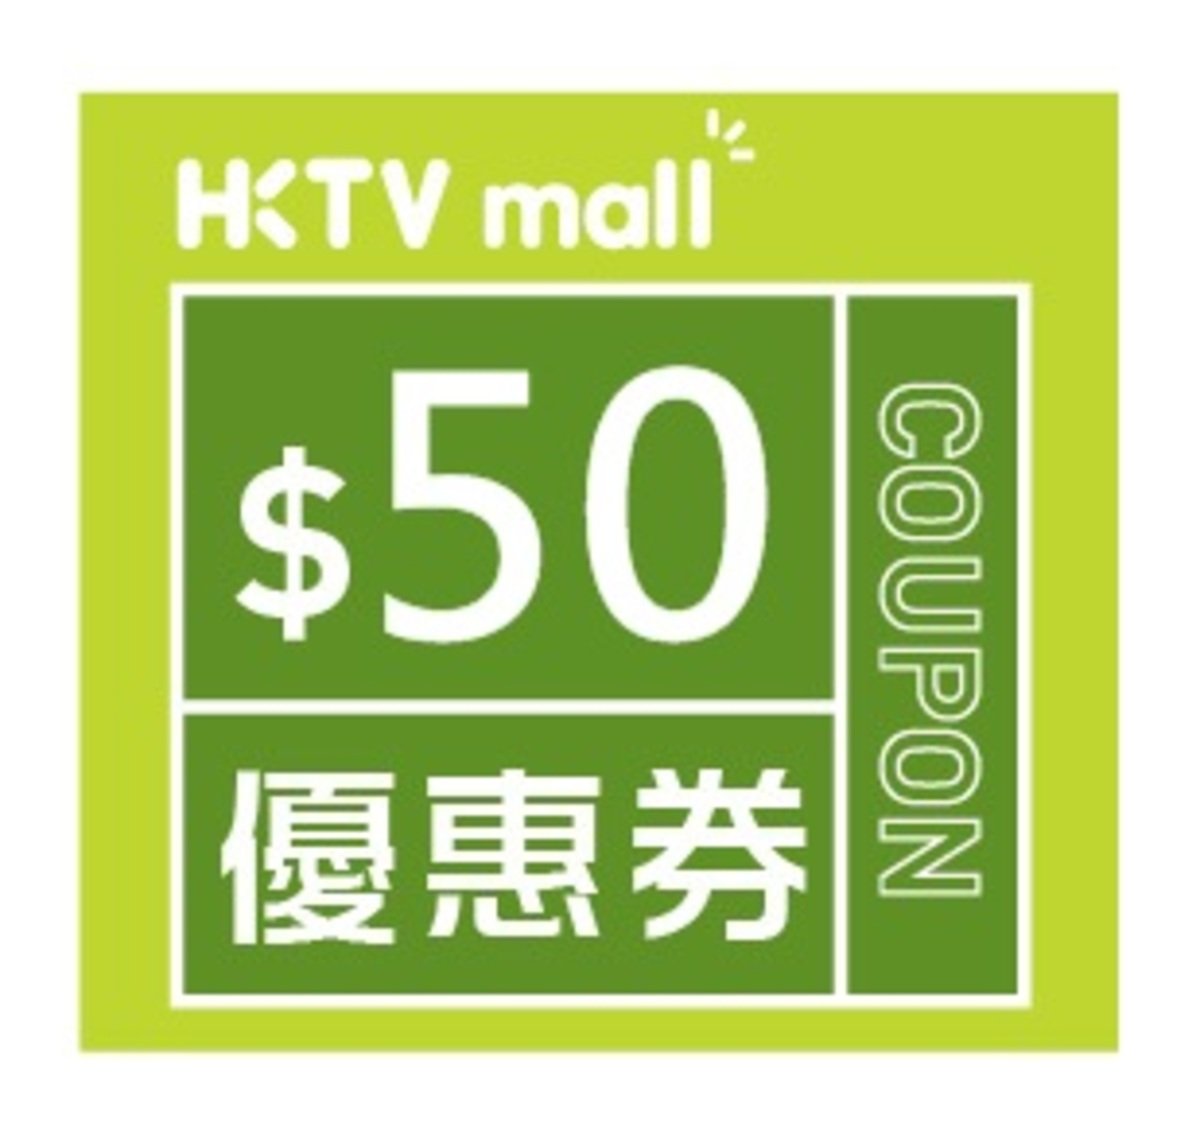 $50 HKTVmall 優惠碼 [有效日期至：2017月3月31日]